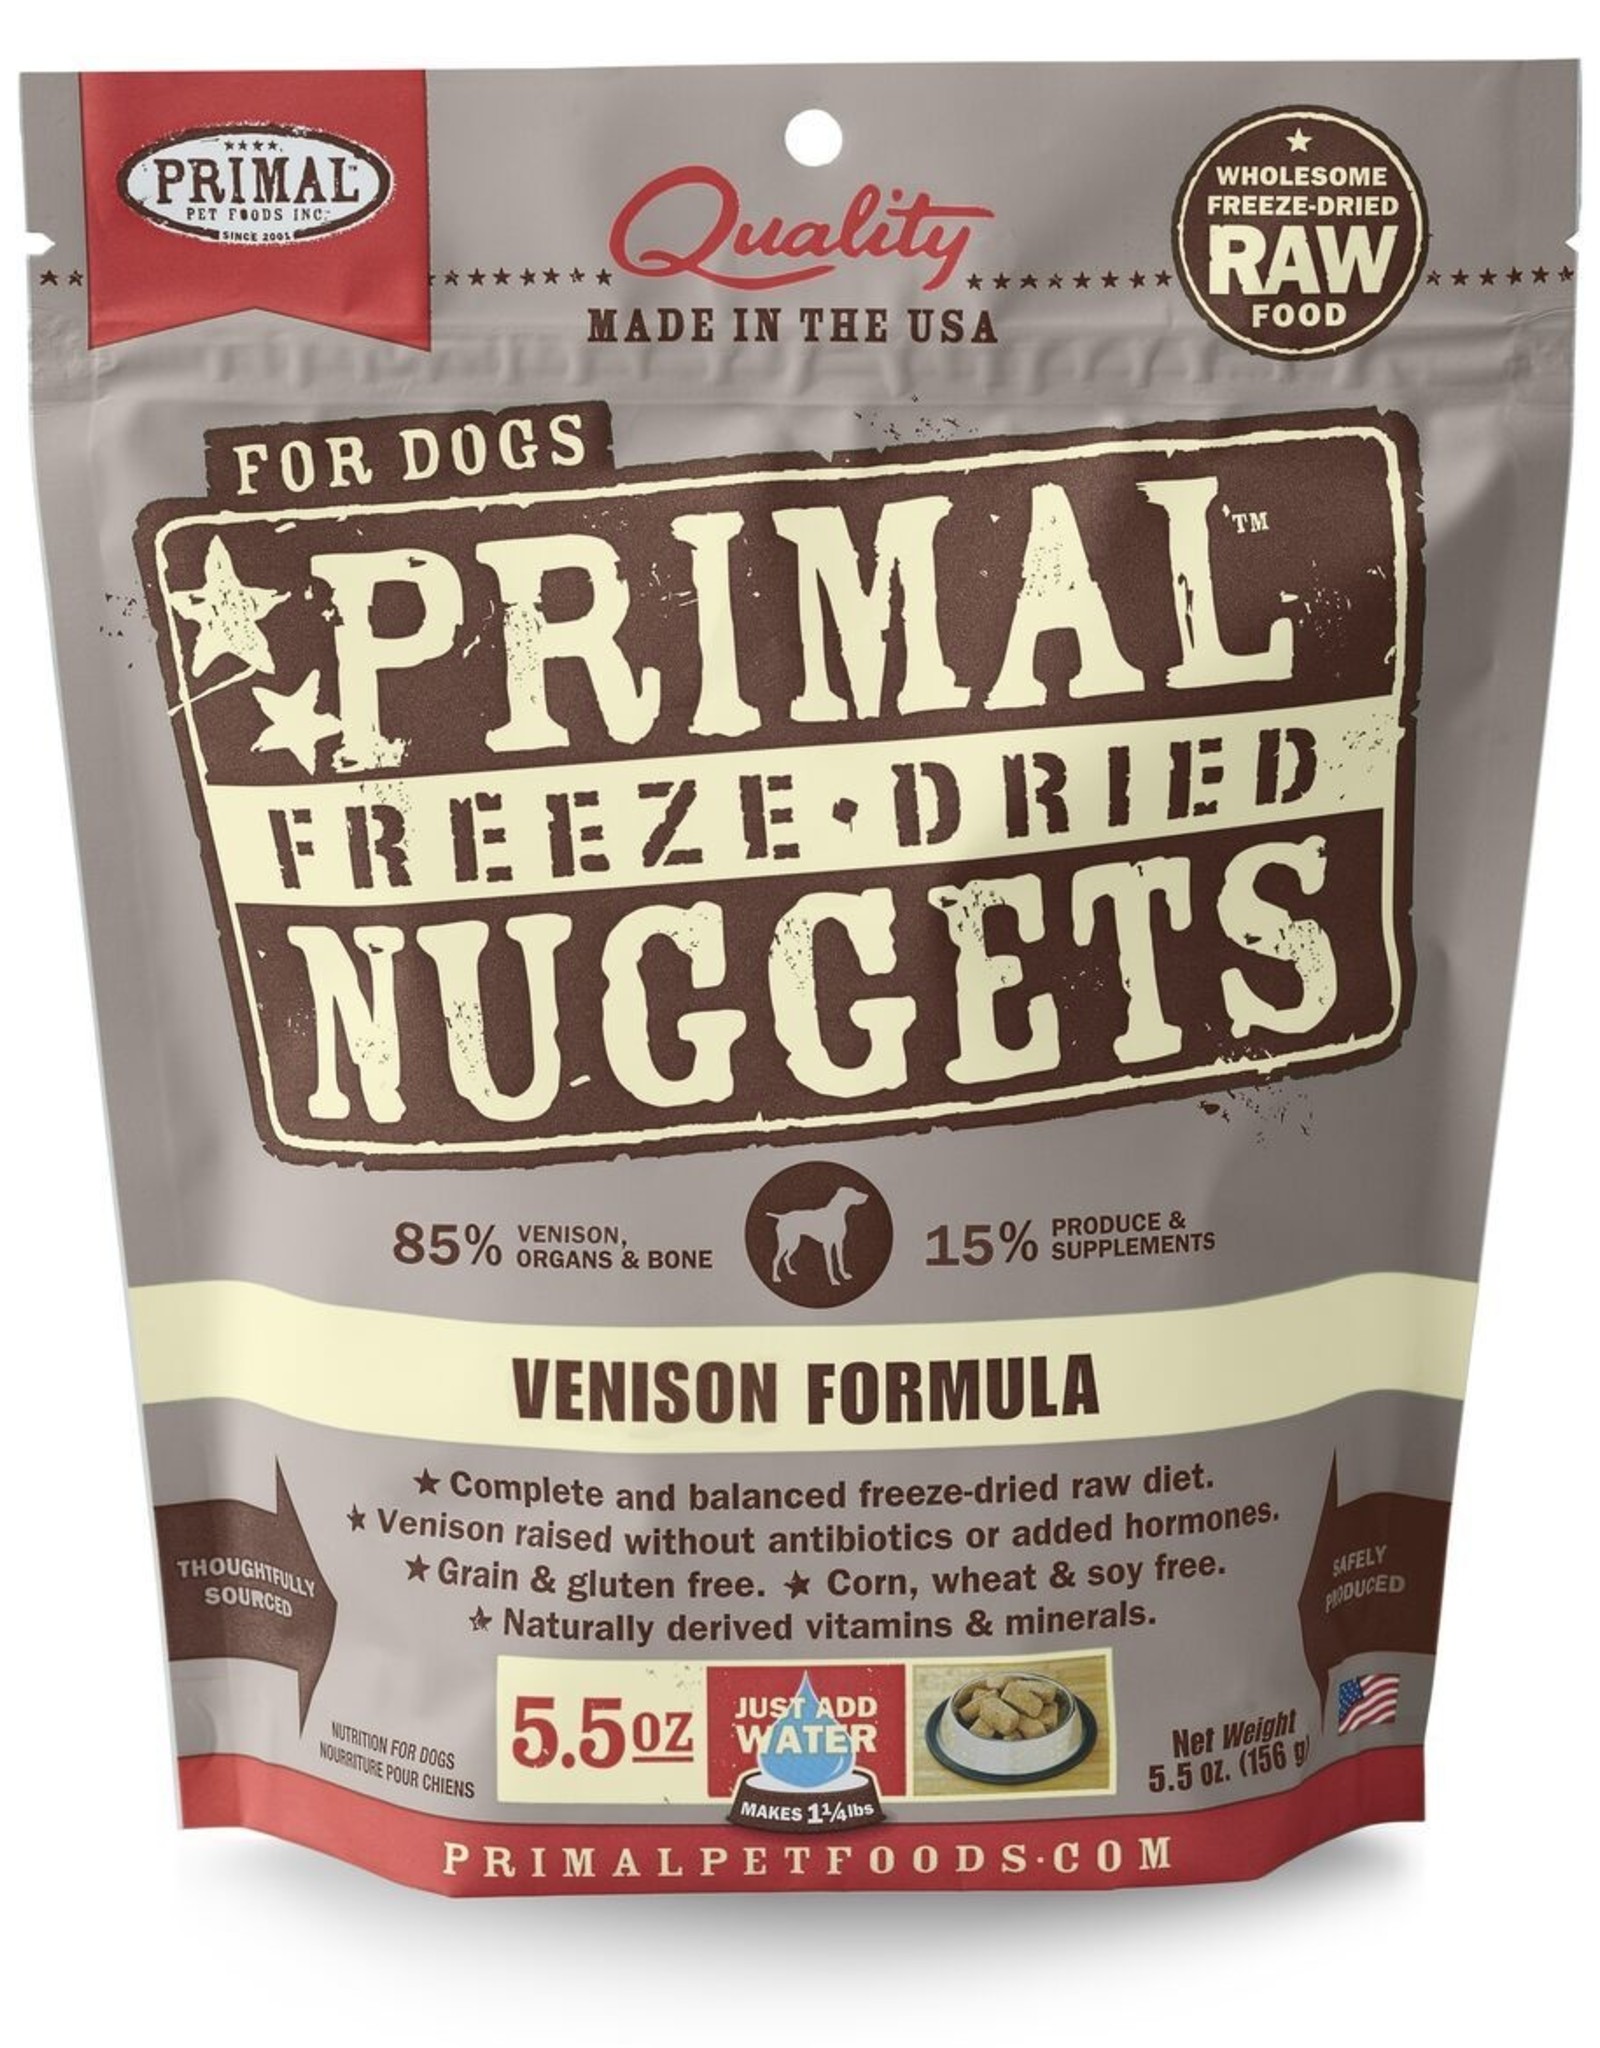 PRIMAL PET FOODS PRIMAL Raw Freeze-Dried Nuggets Canine Venison Formula